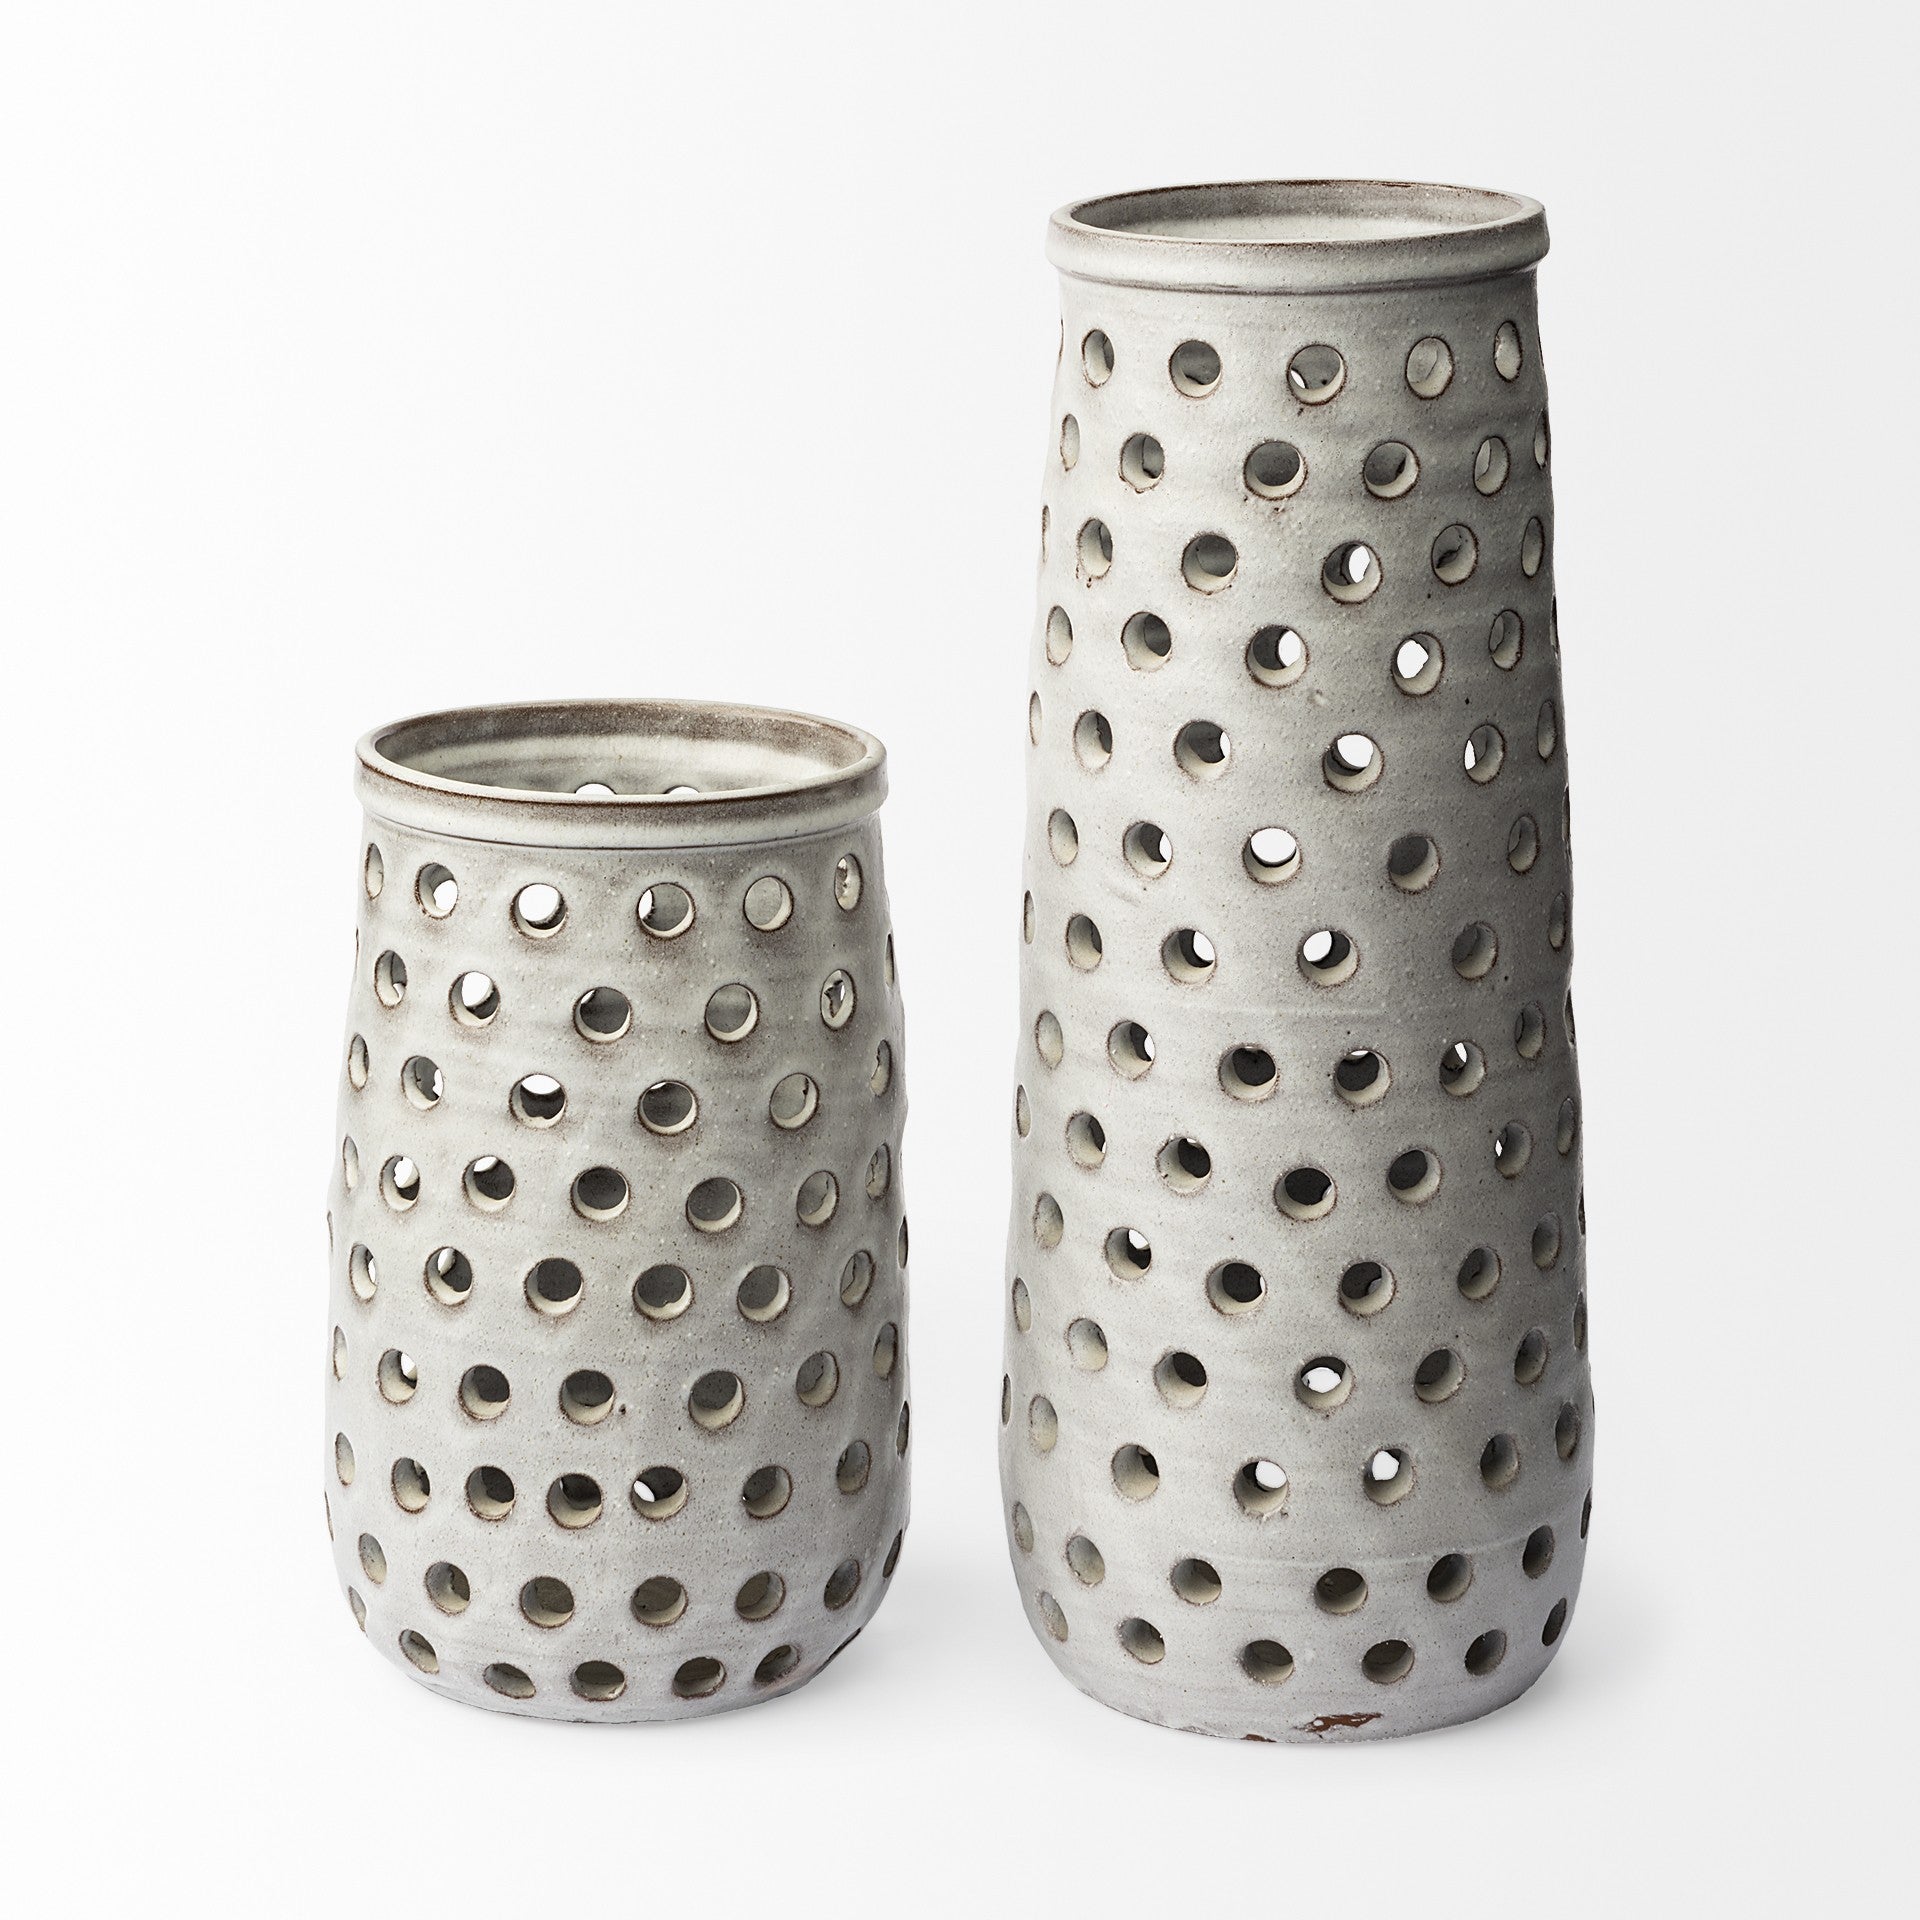 19" Organic White Glaze Pierced Dot Ceramic Vase